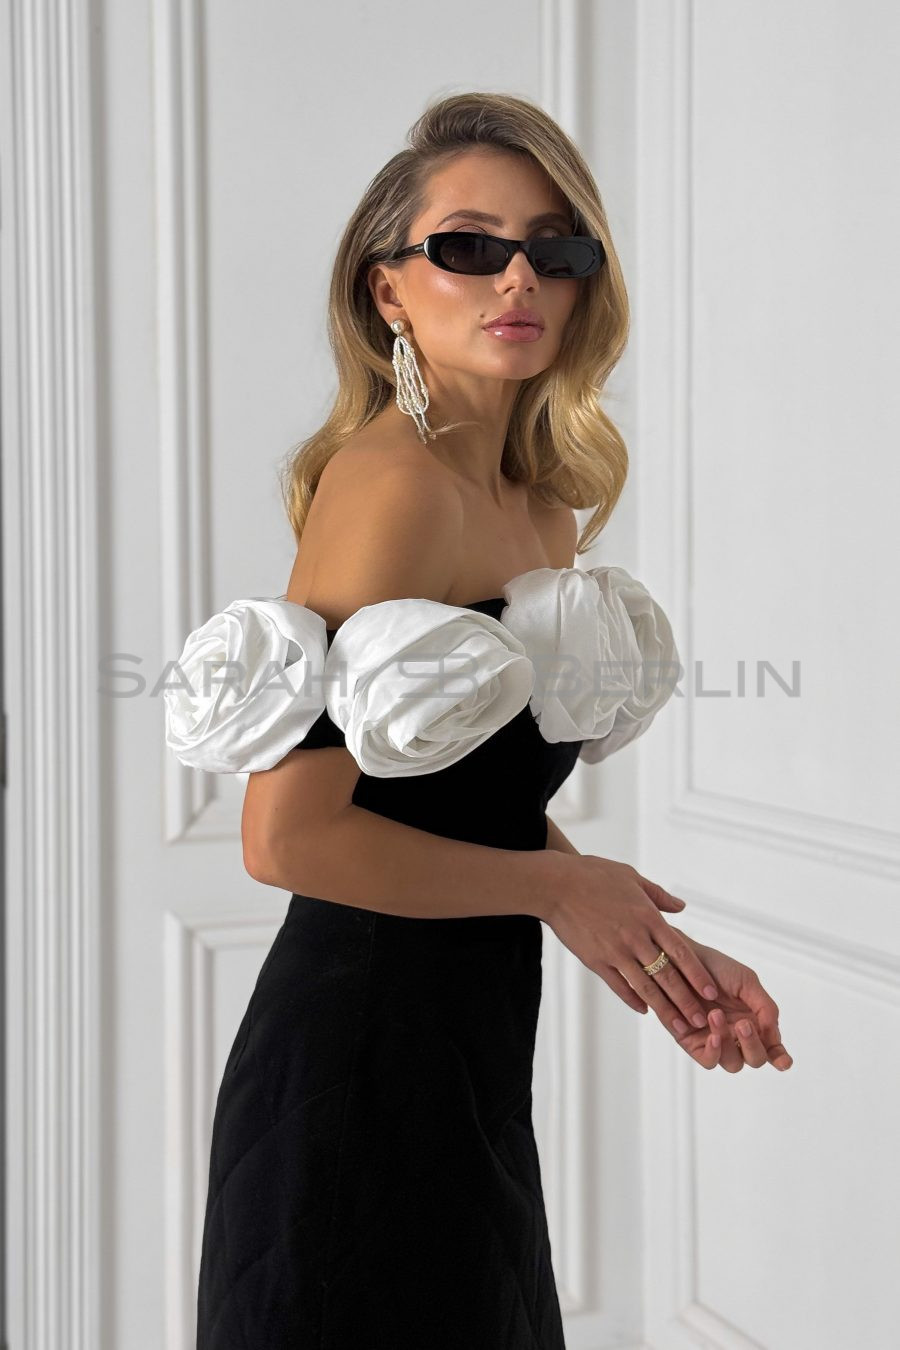 Above-the-knee dress in Italian velvet, off-the-shoulder, with white roses